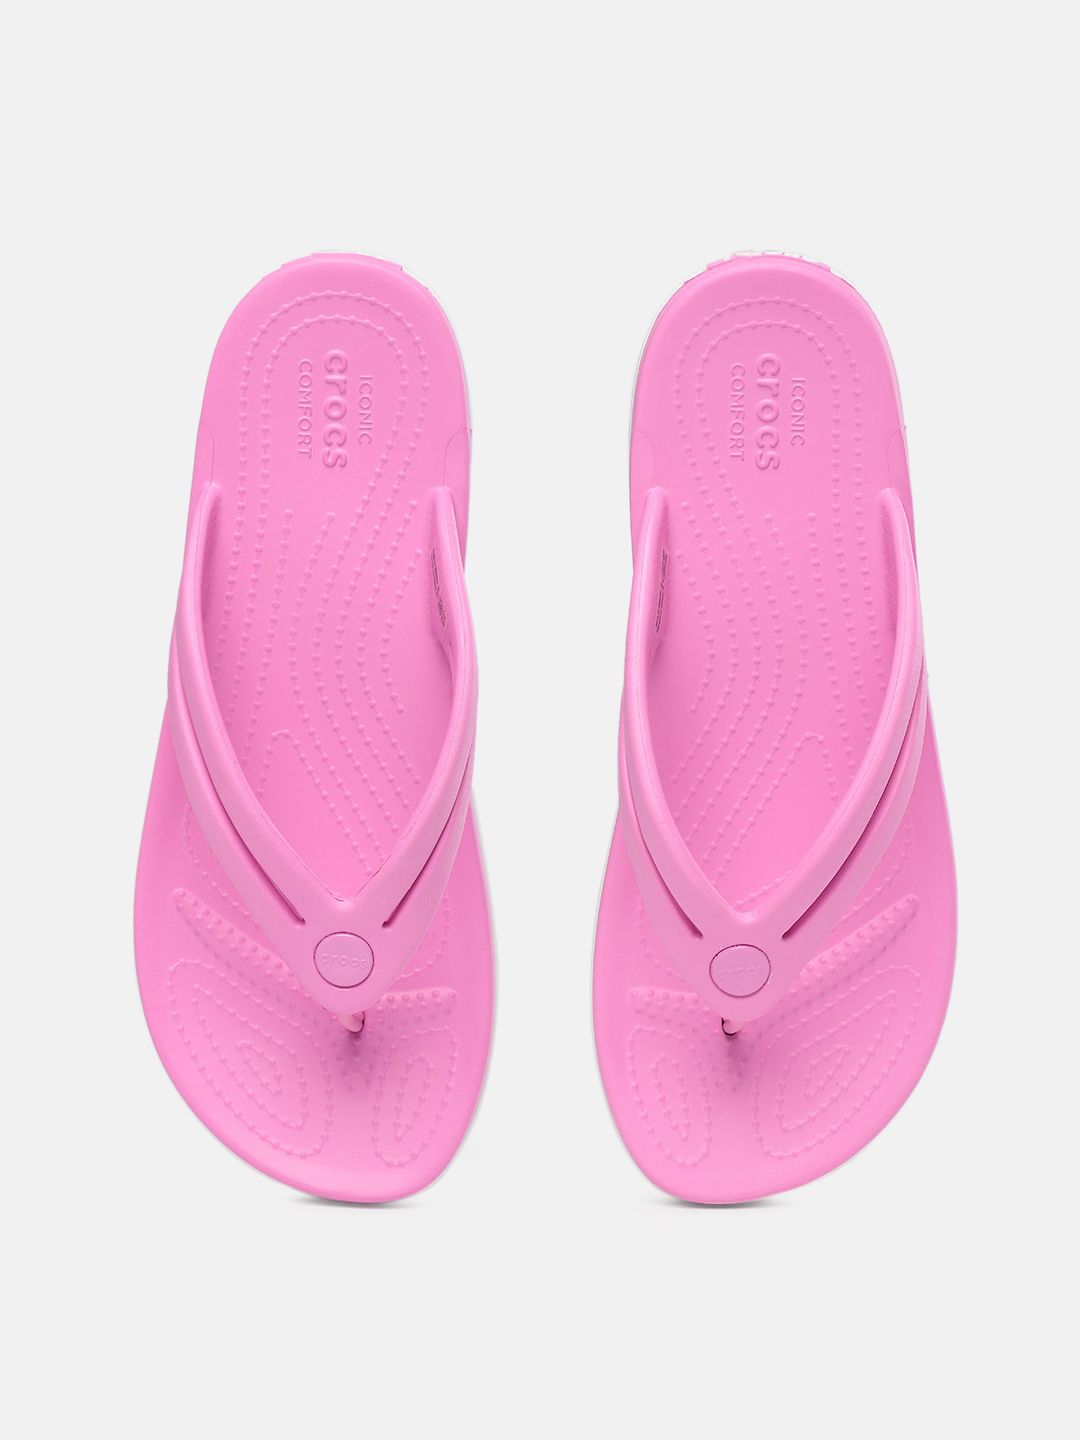 Crocs Women Pink Croslite Thong Flip-Flops Price in India